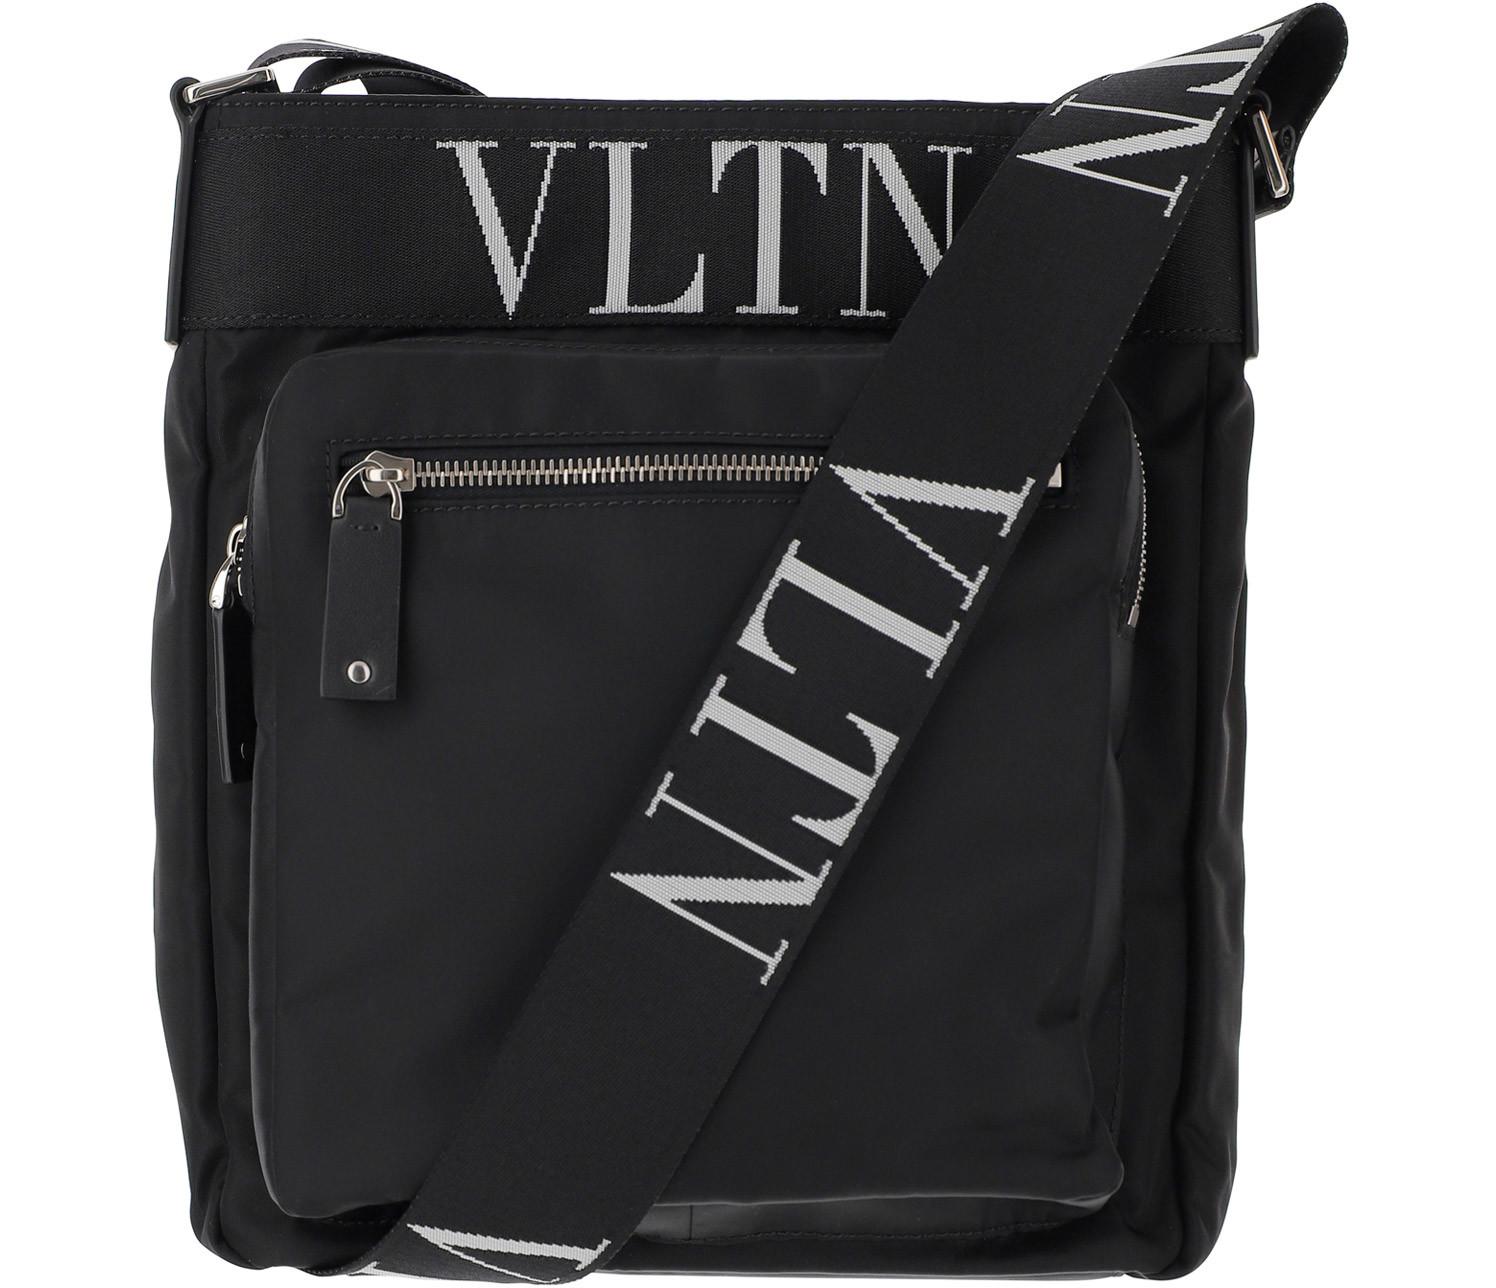 Valentino Black Nylon Crossbody Bag at FORZIERI